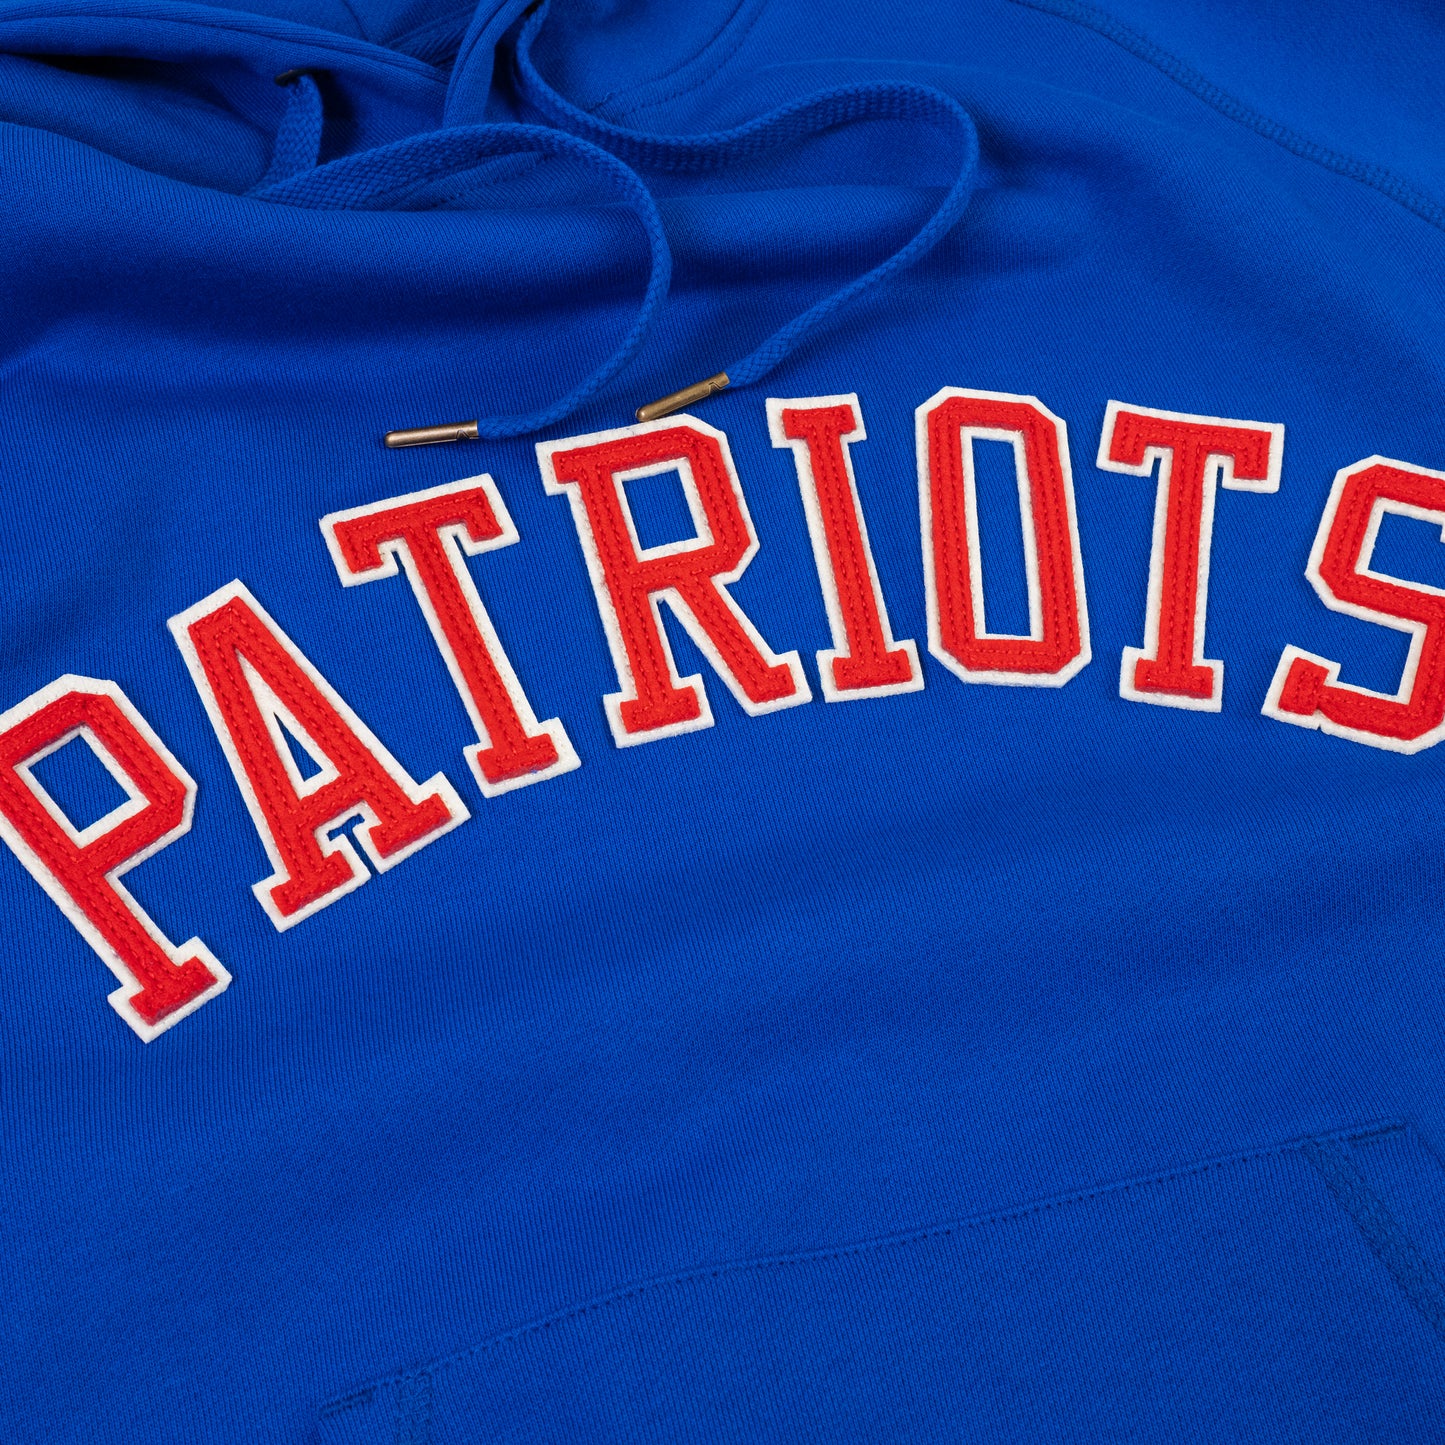 Boston Patriots French Terry Hooded Sweatshirt